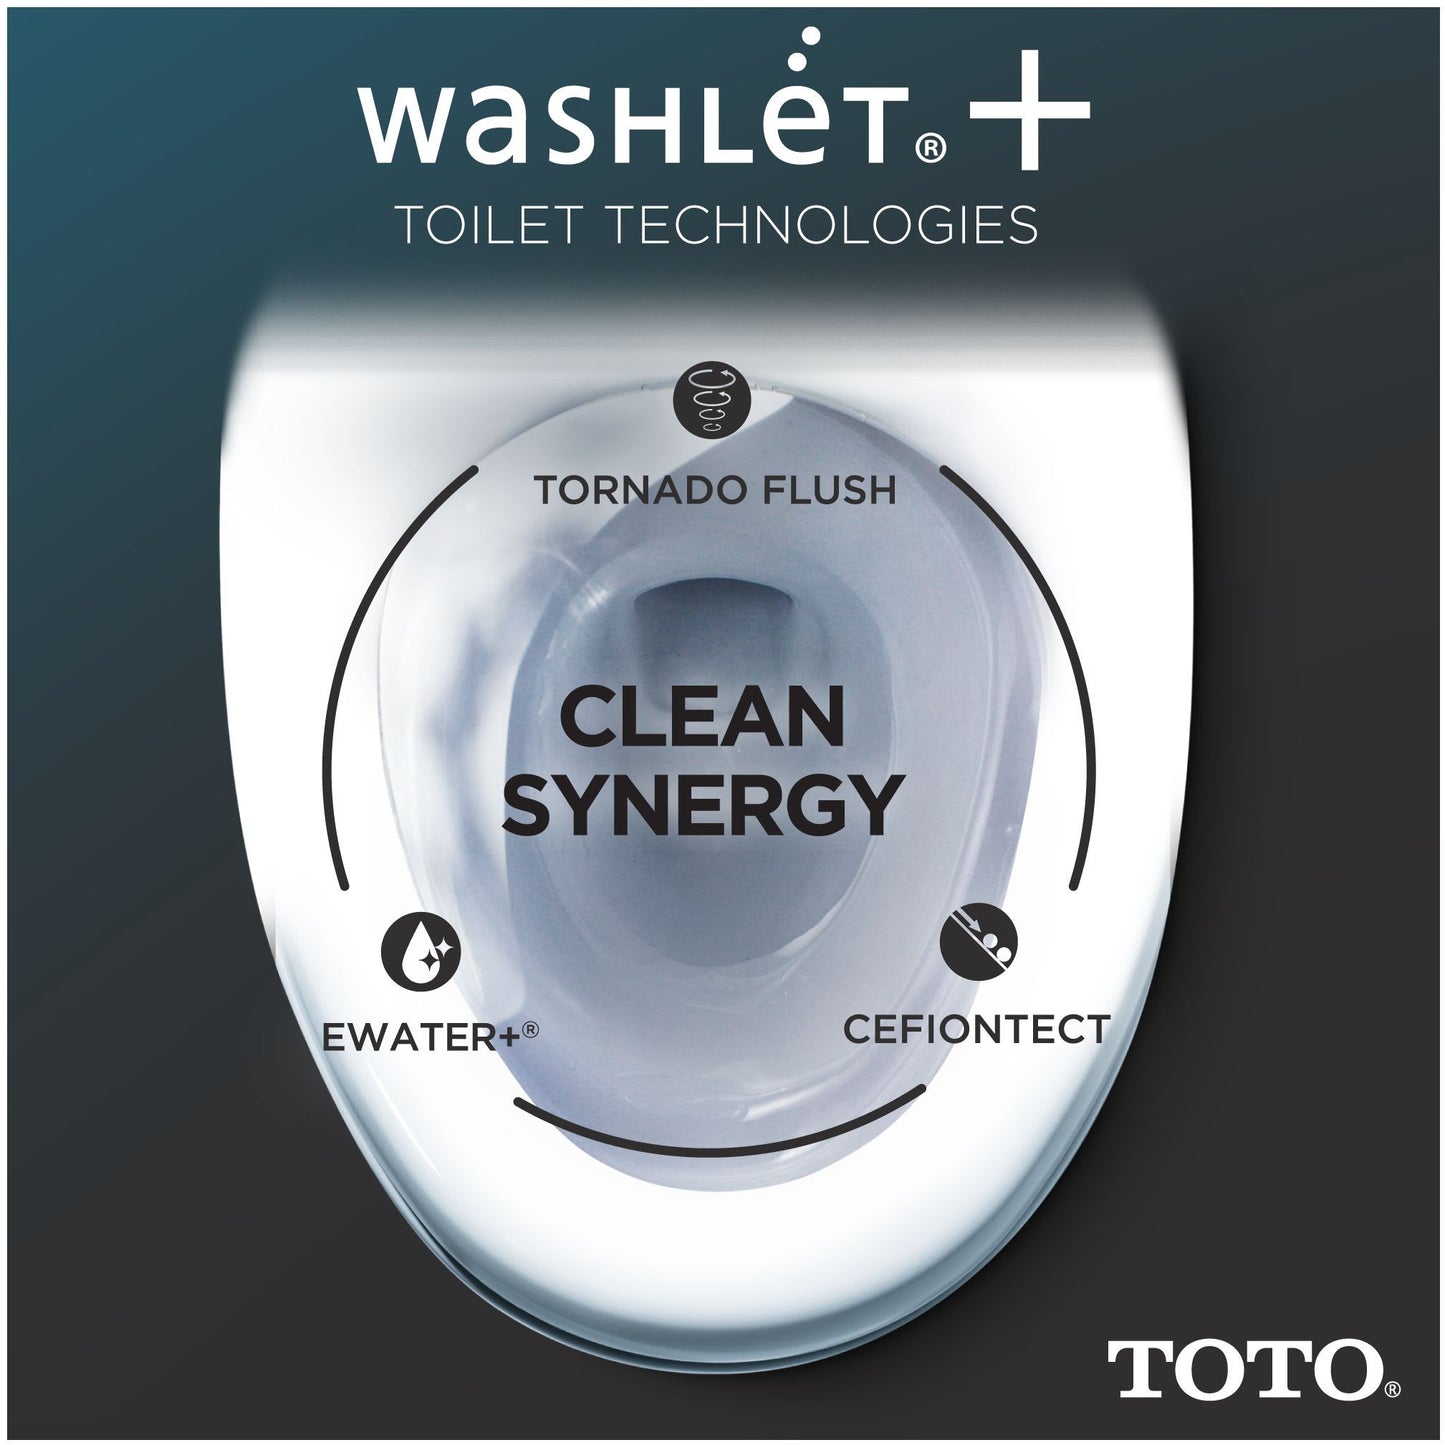 AP Washlet+ S500E Wall-Hung Toilet - 1.28 & 0.9 GPF - Matte Silver - CWT4263046CMFG#MS